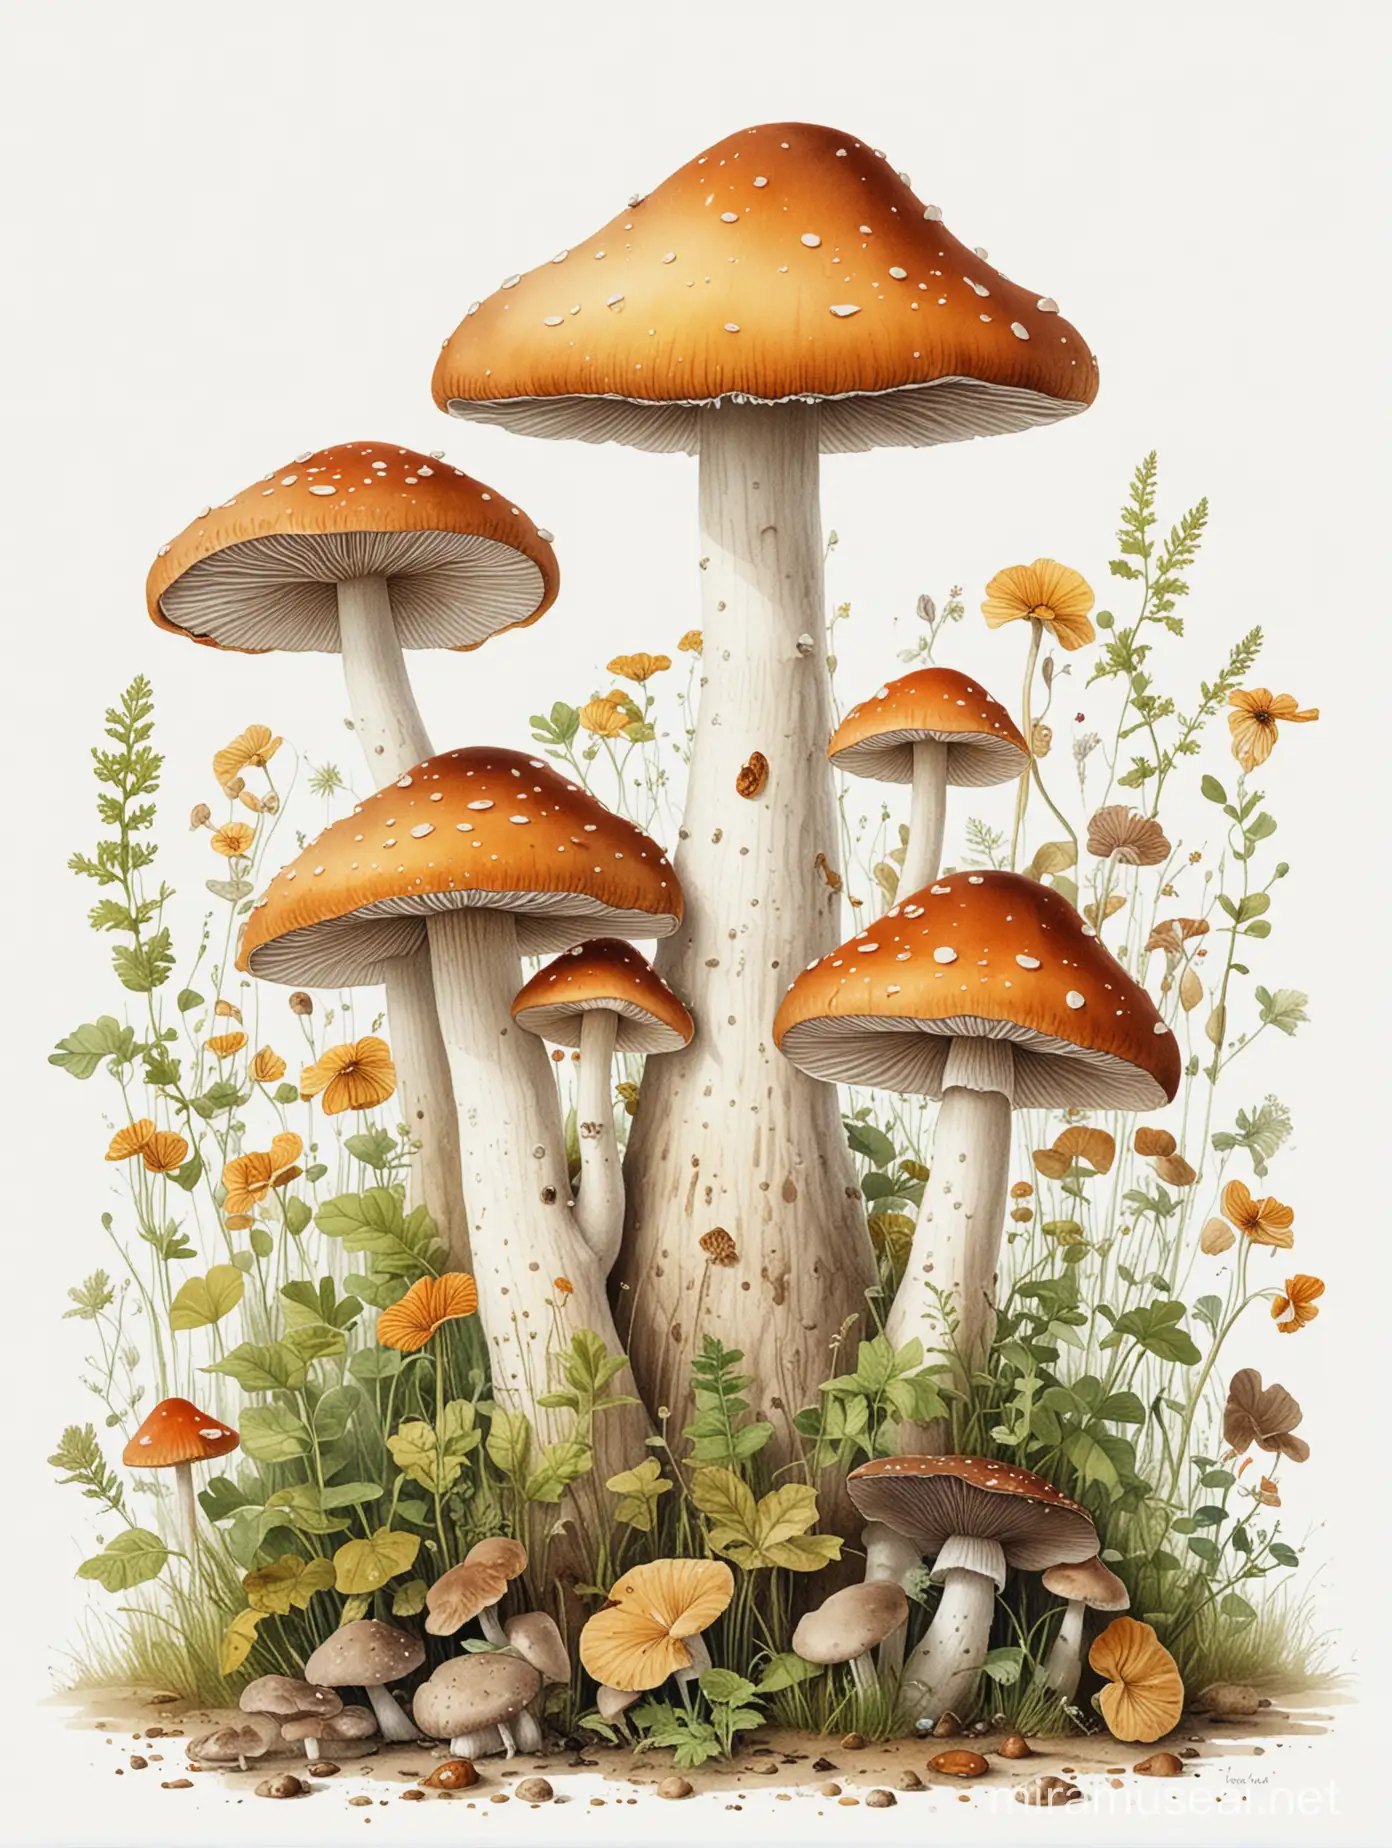 Whimsical Mushroom Wonderland from a Childrens Book